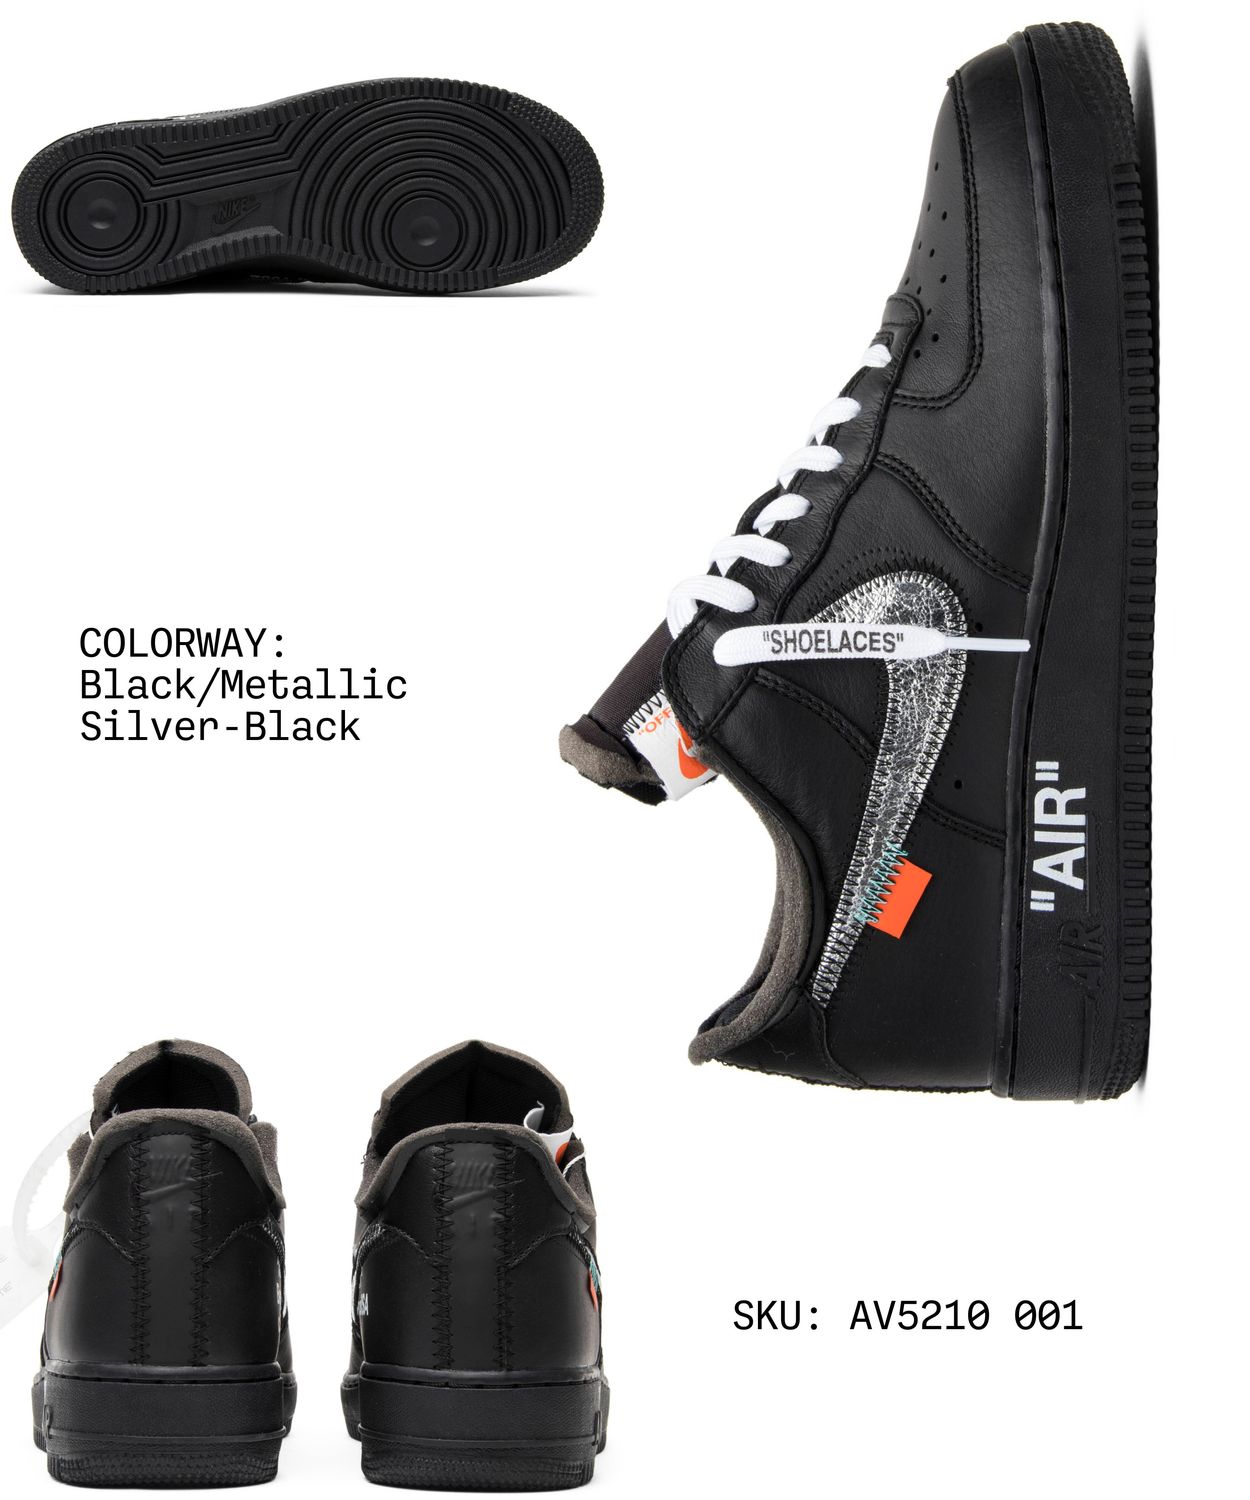 Off White X Air Force 1 Low '07 'MoMA' - Nike - AV5210 001 - black/metallic  silver-black